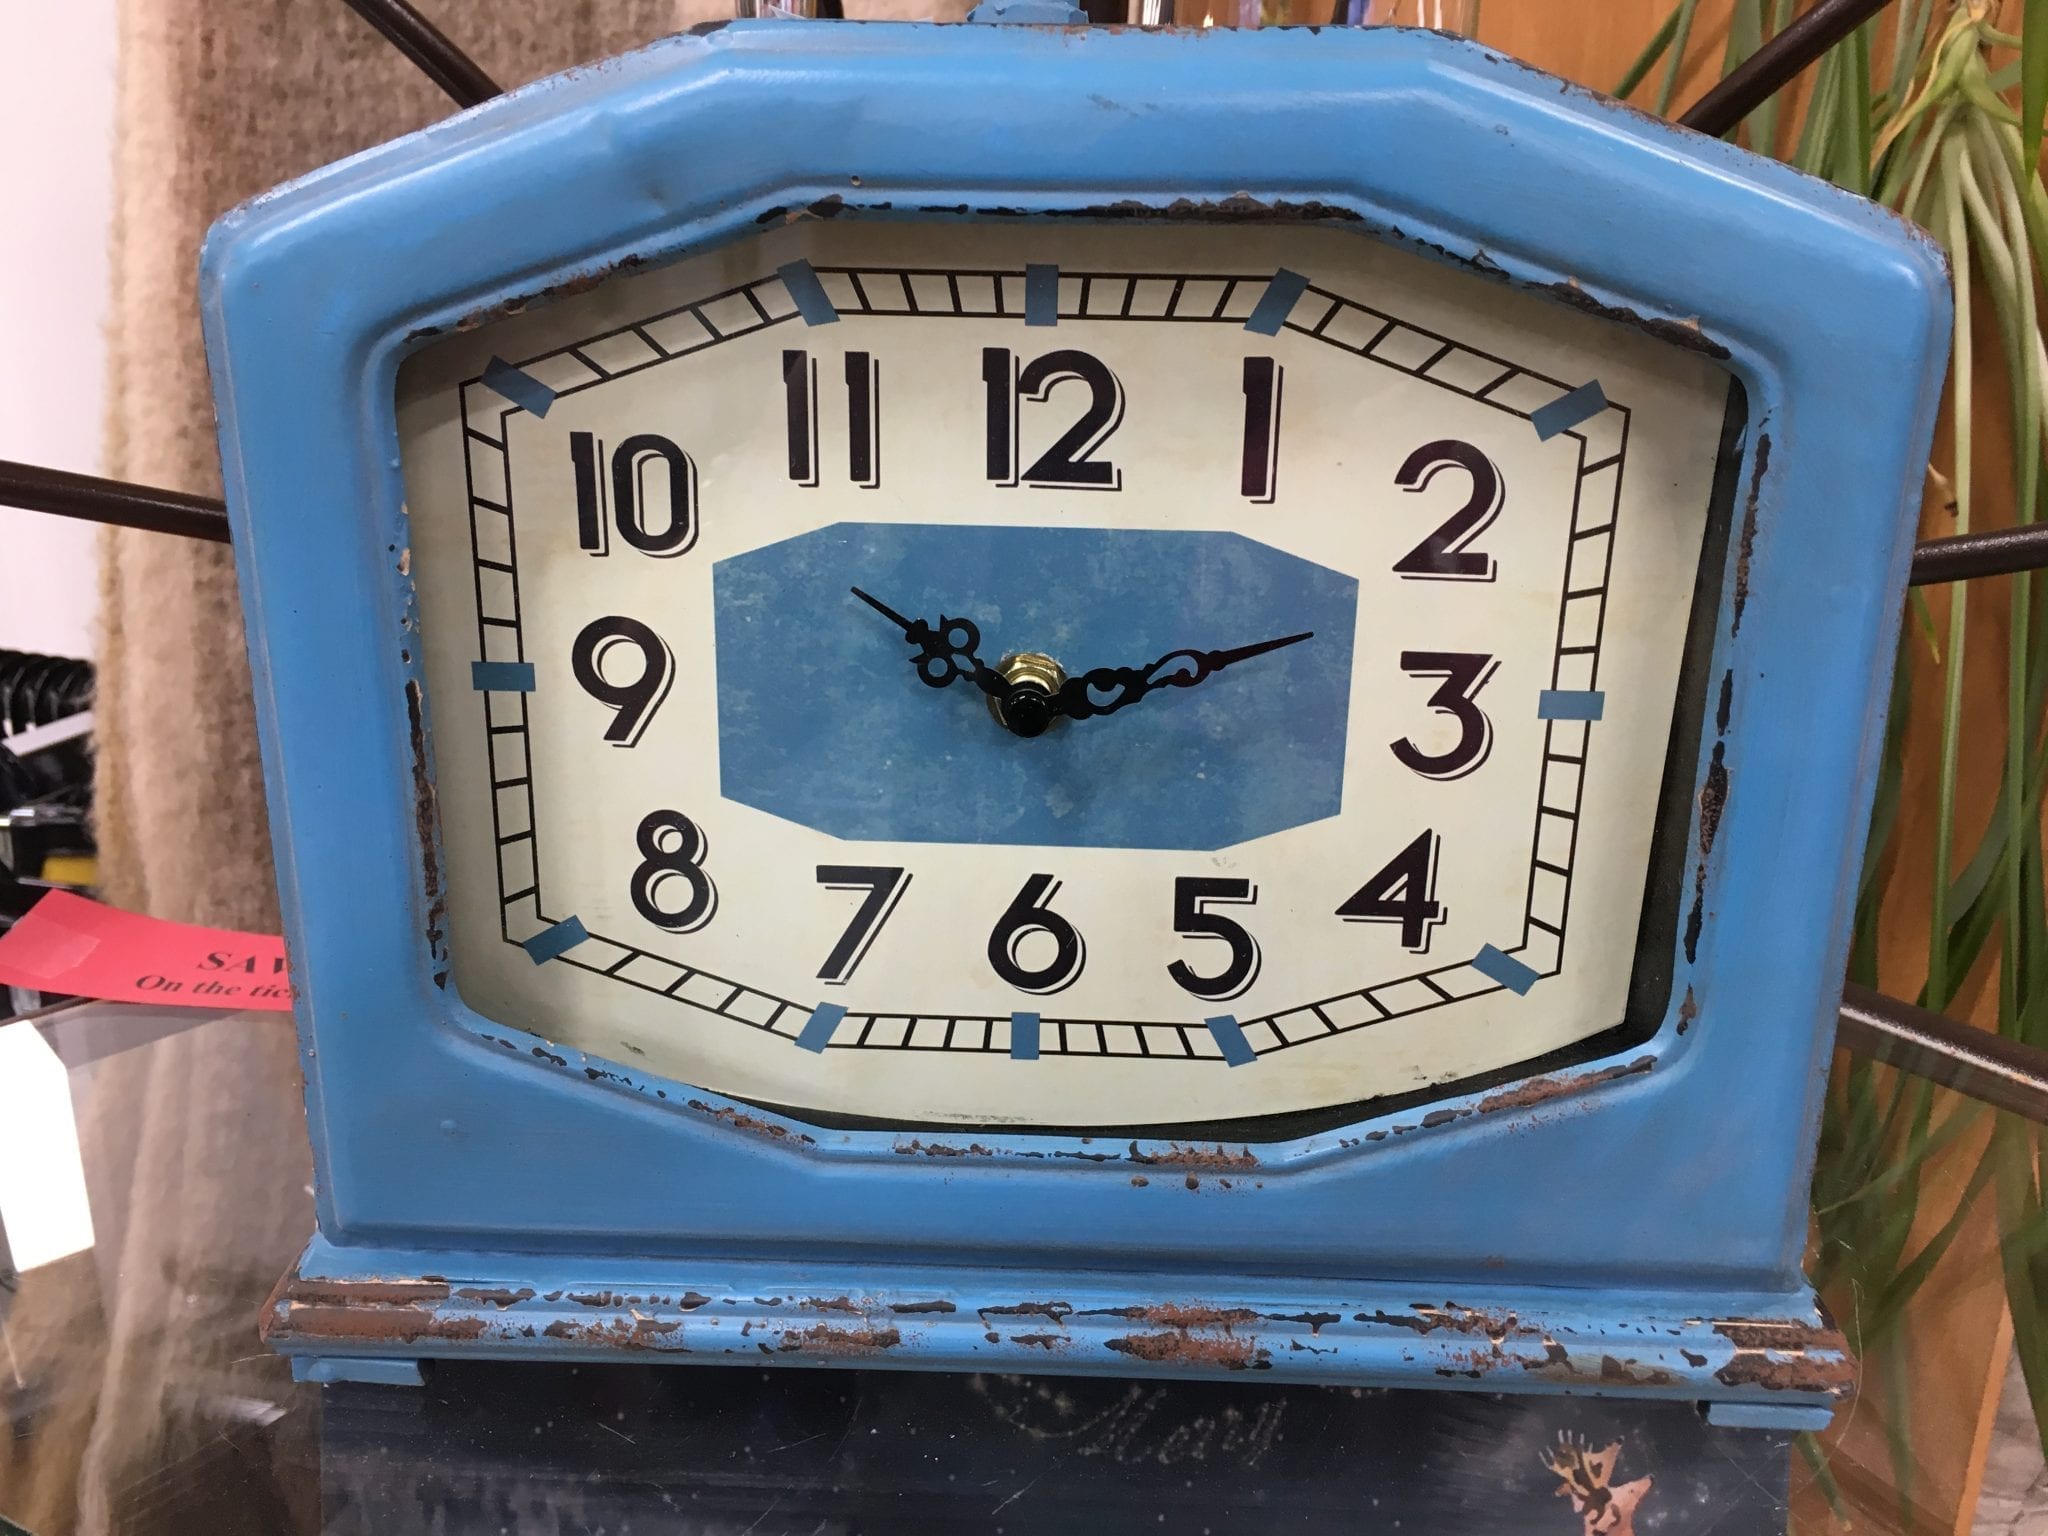 A beautiful blue antique style clock